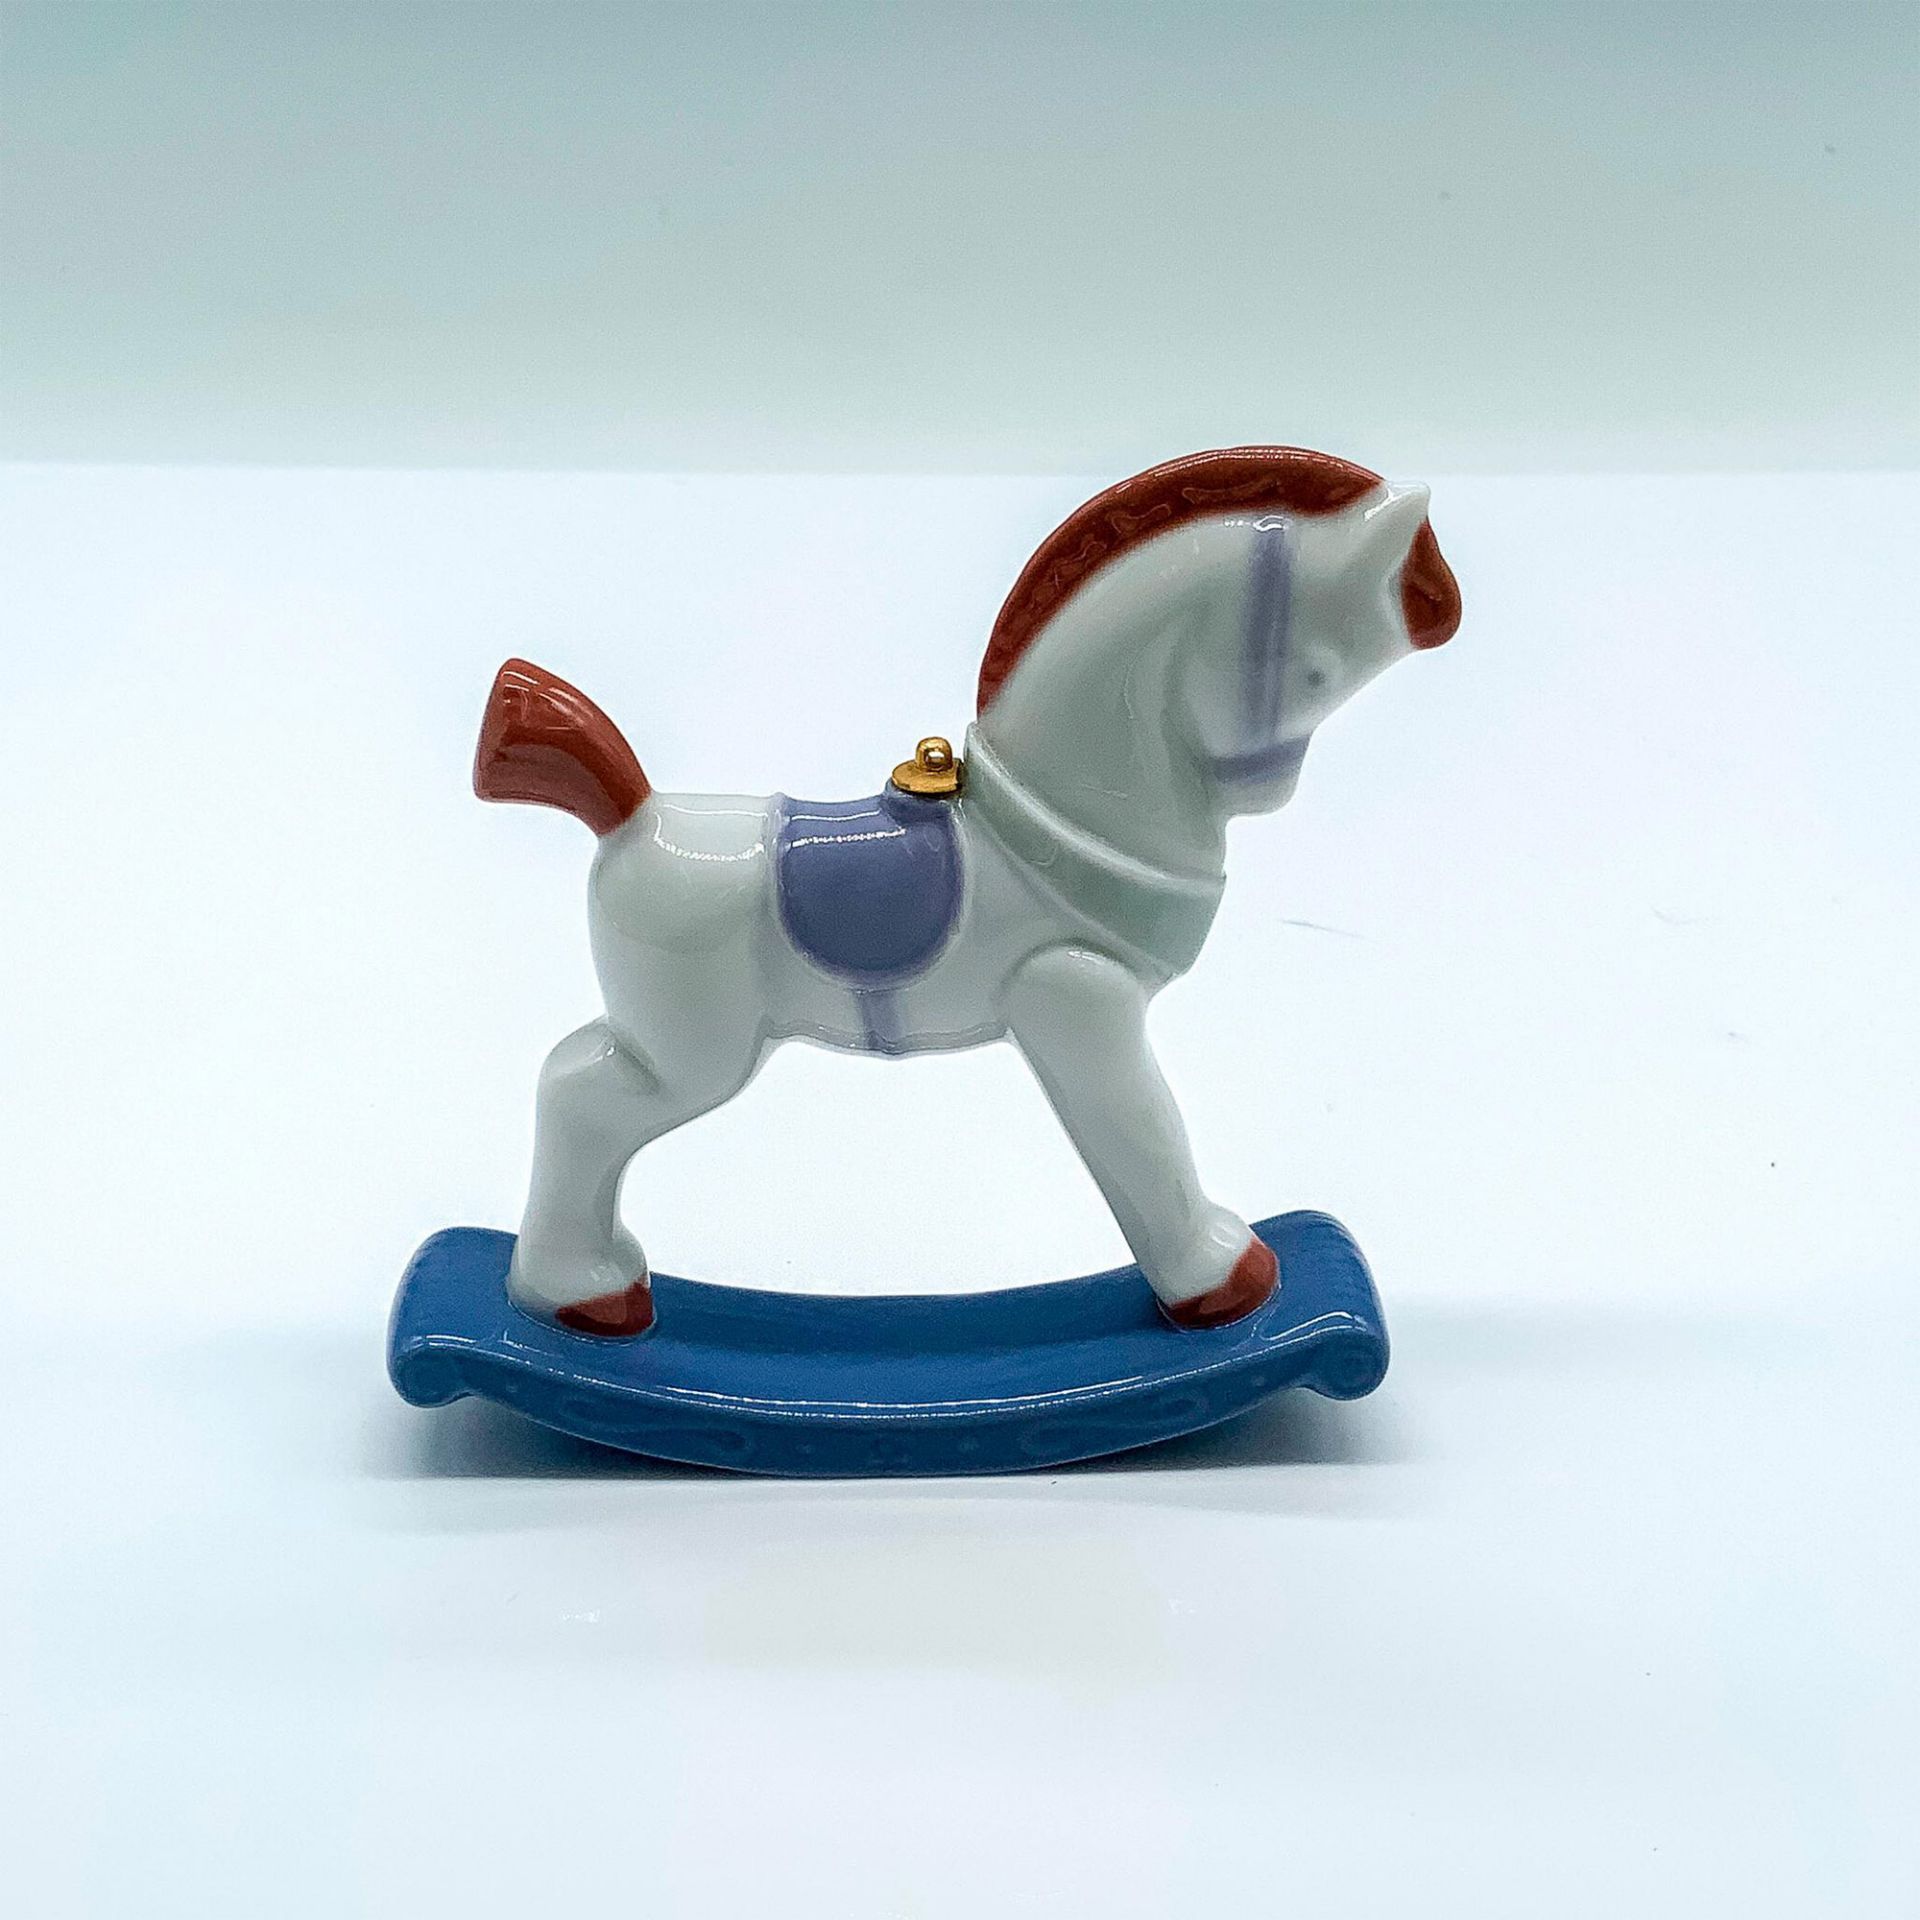 Rocking Horse 1006262 - Lladro Porcelain Figurine - Image 2 of 3